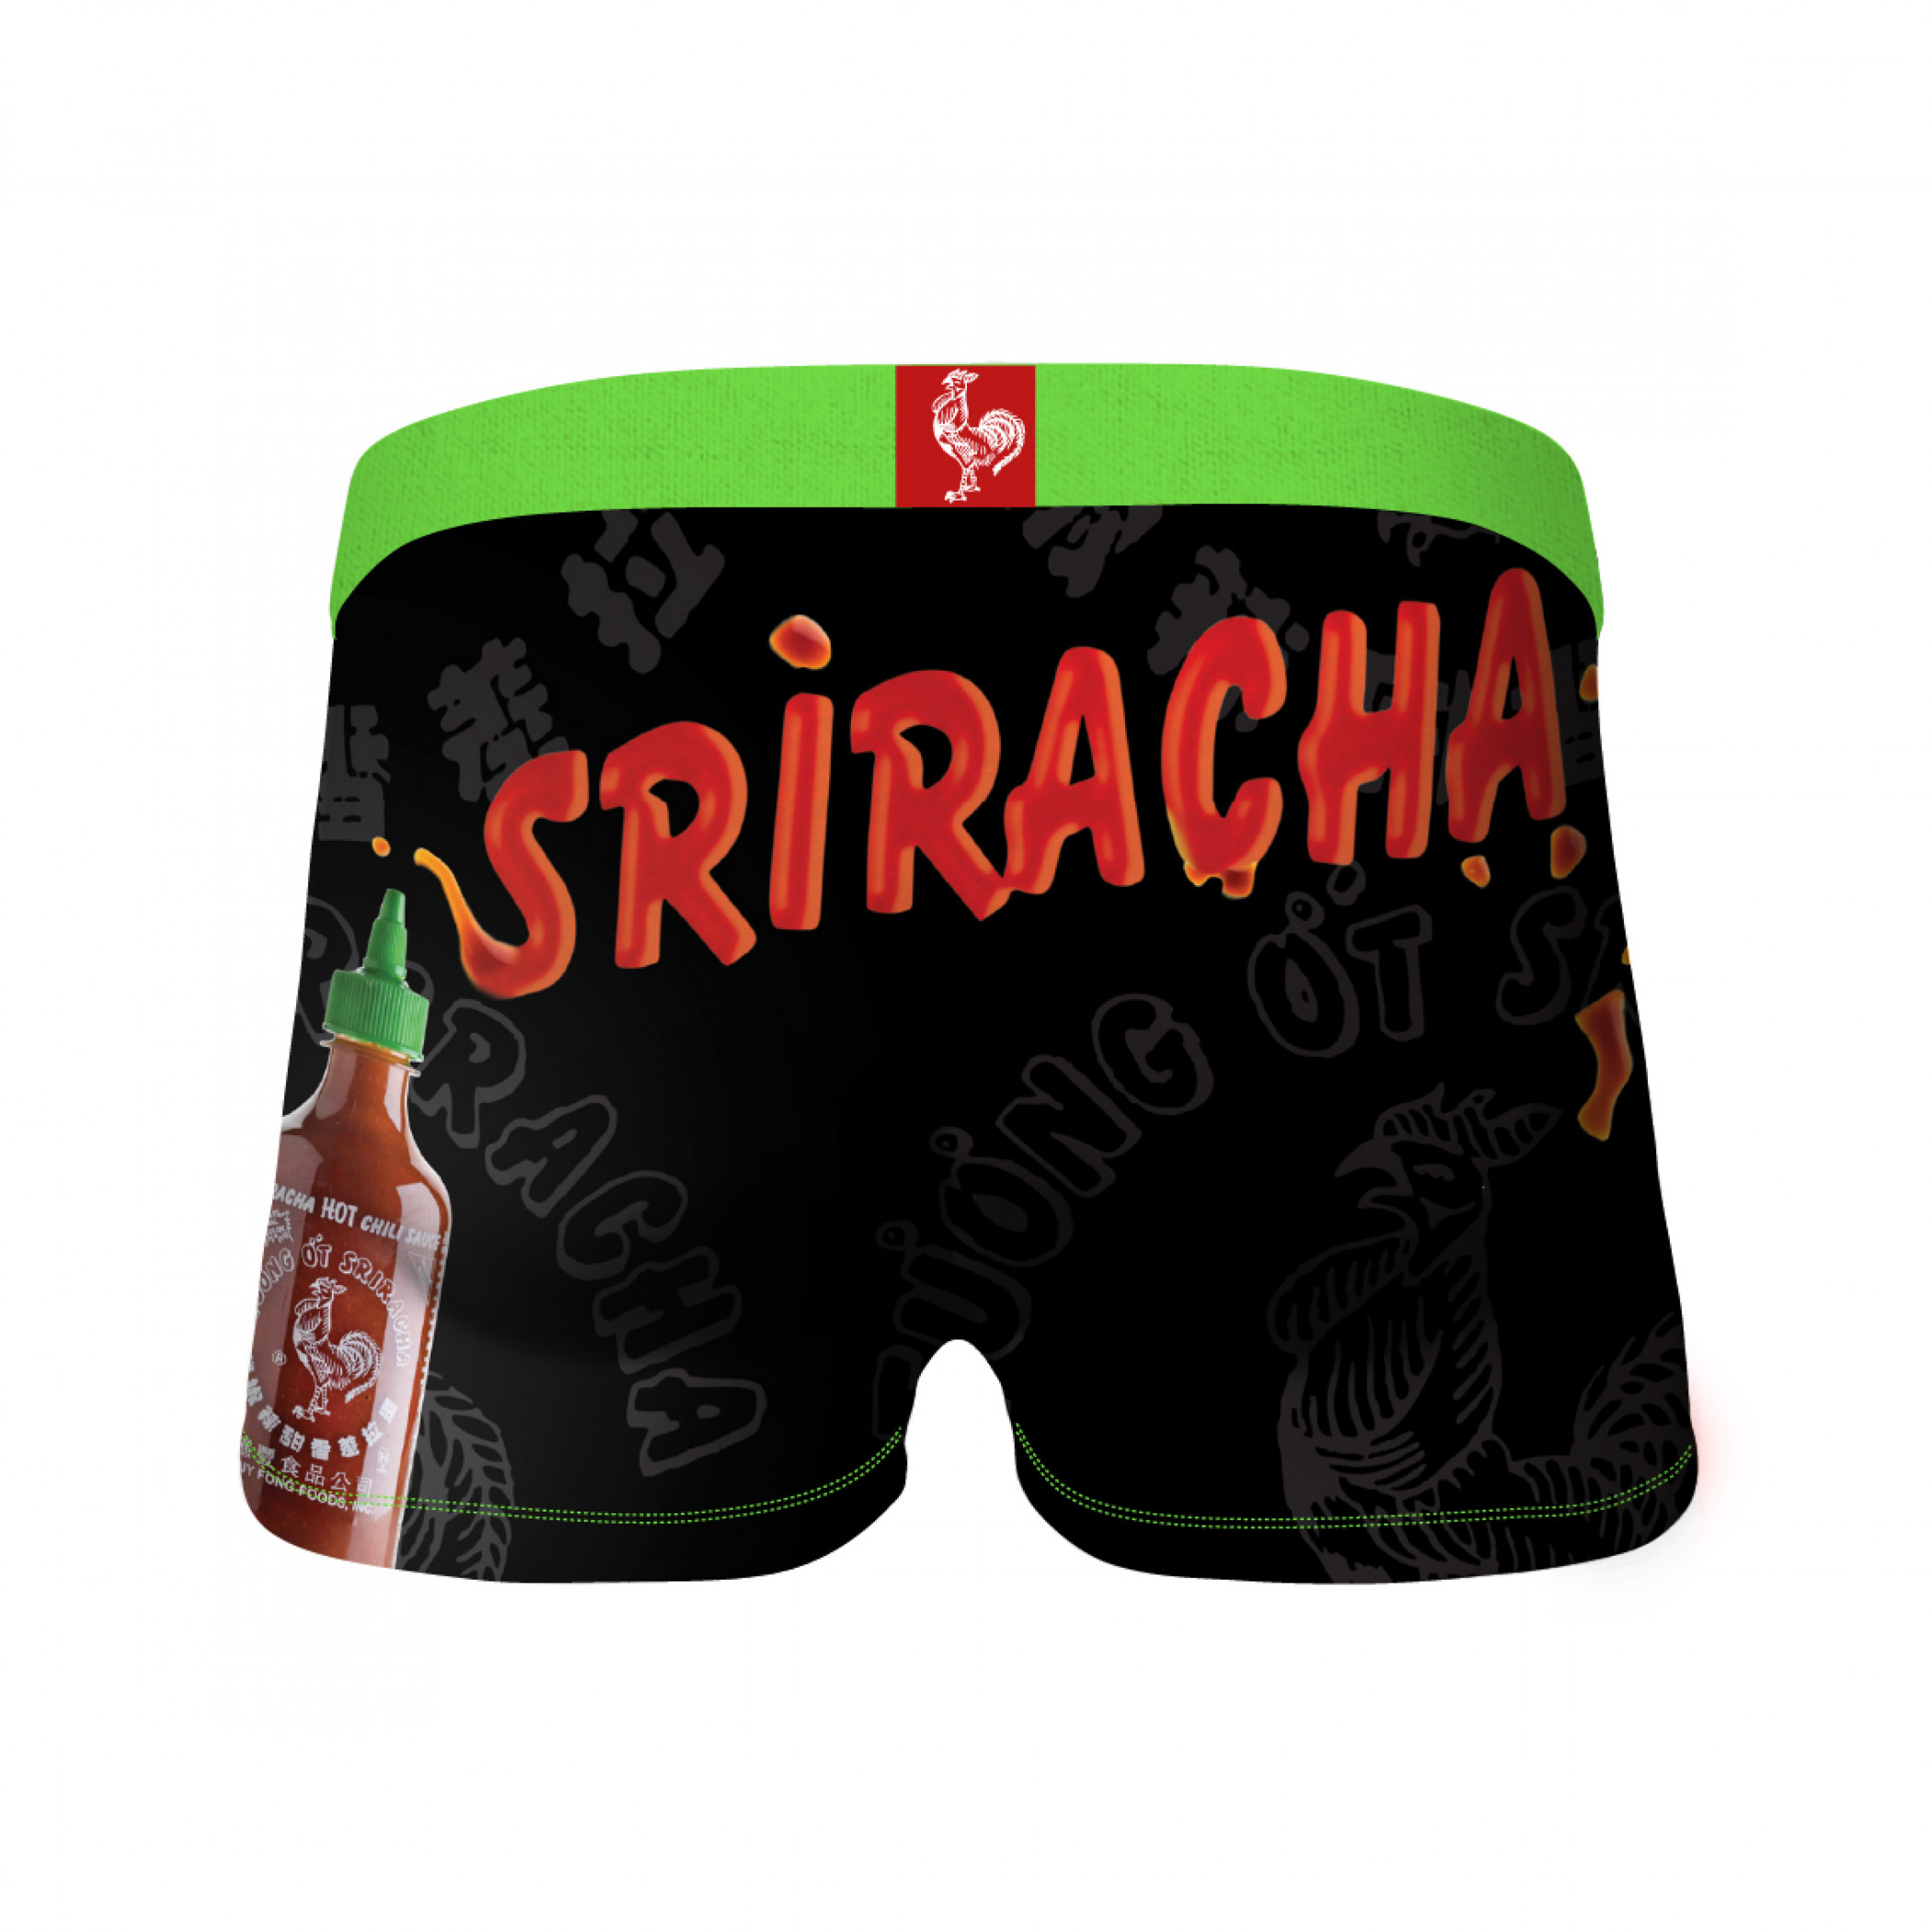 Crazy Boxers Sriracha Bottle and Text Boxer Briefs